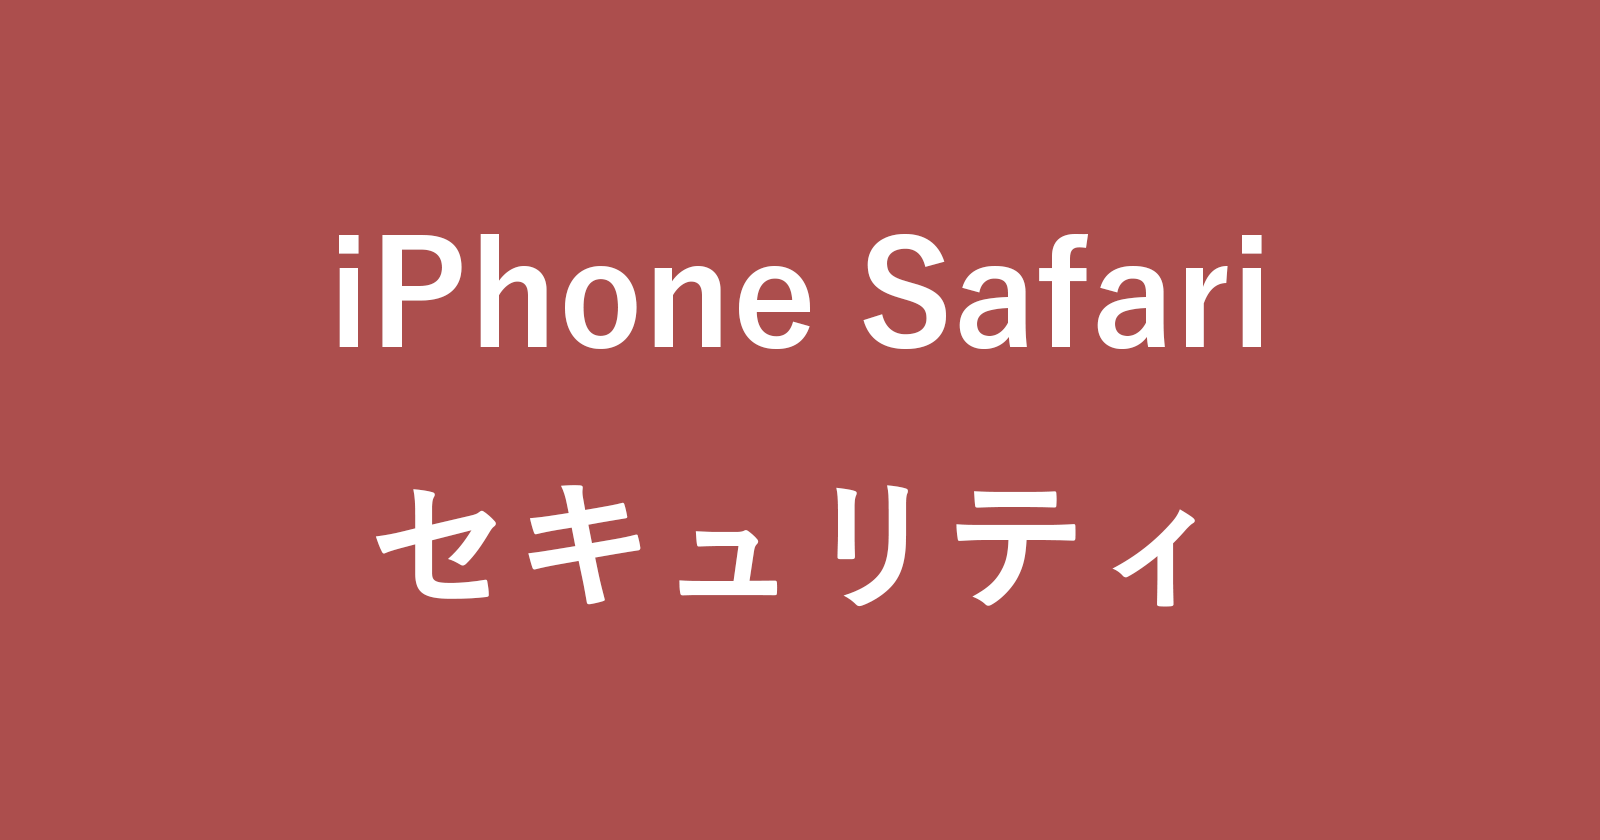 iphone safari security